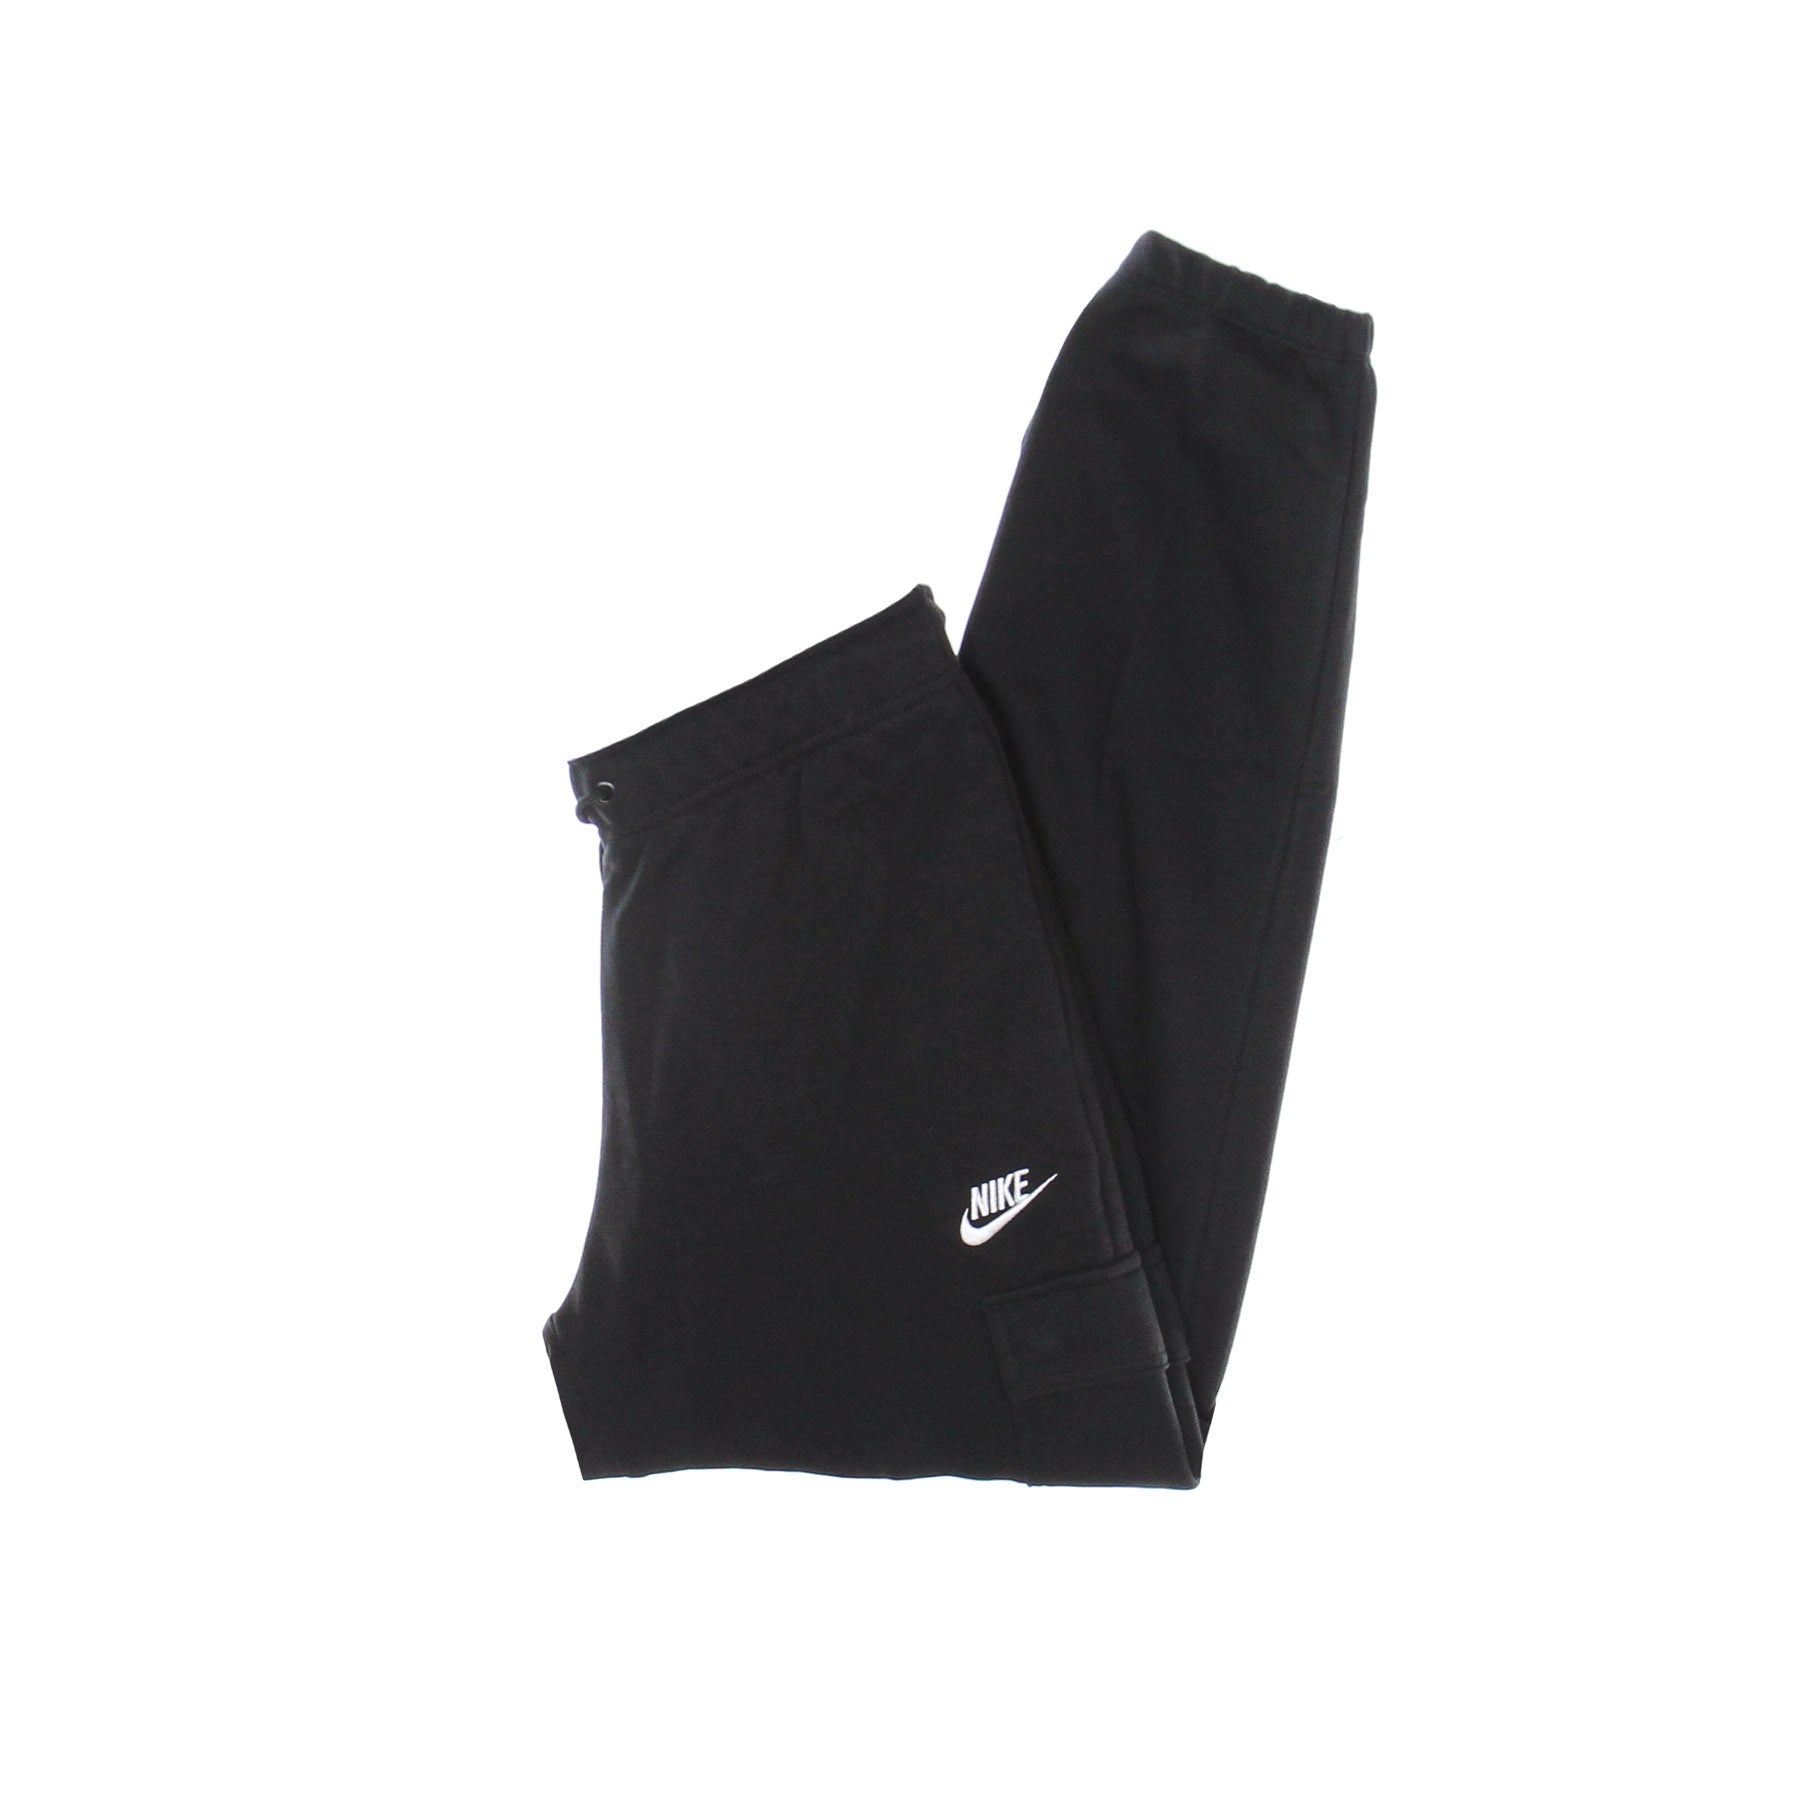 Nike, Pantalone Tuta Felpato Donna W Essential Fleece Mr Cargo Pant, Black/white